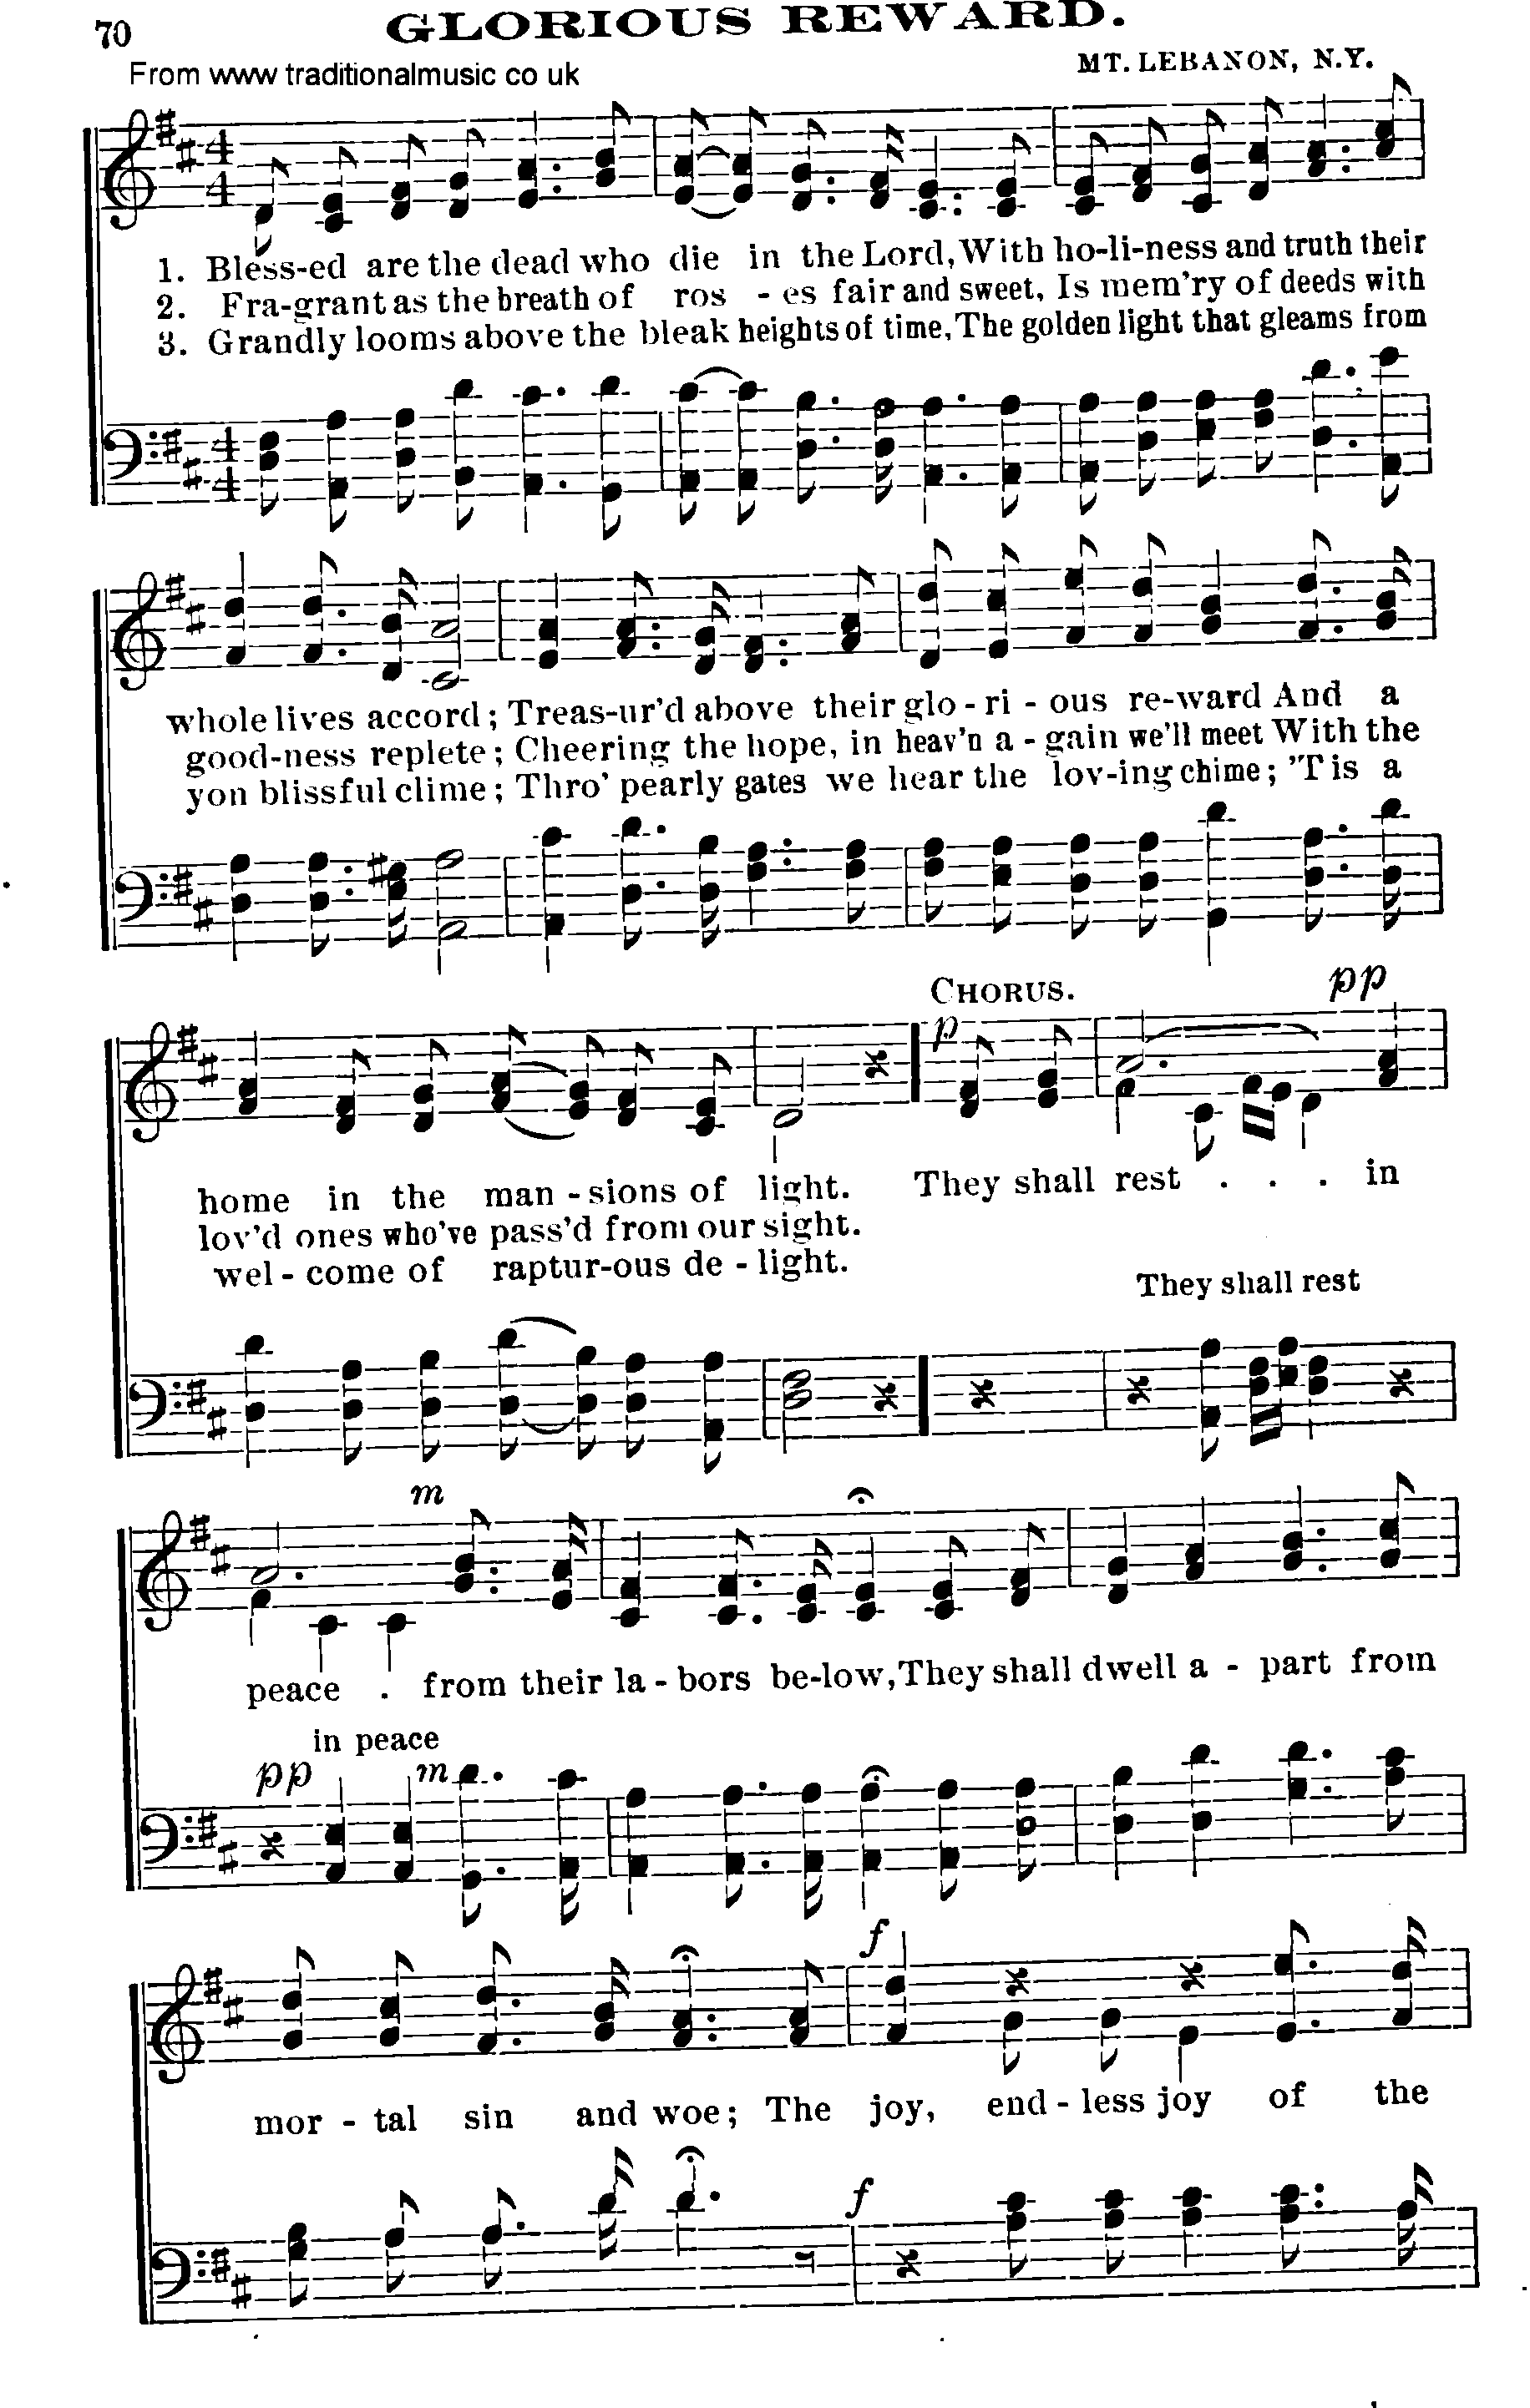 Shaker Music collection, Hymn: glorious reward, sheetmusic and PDF